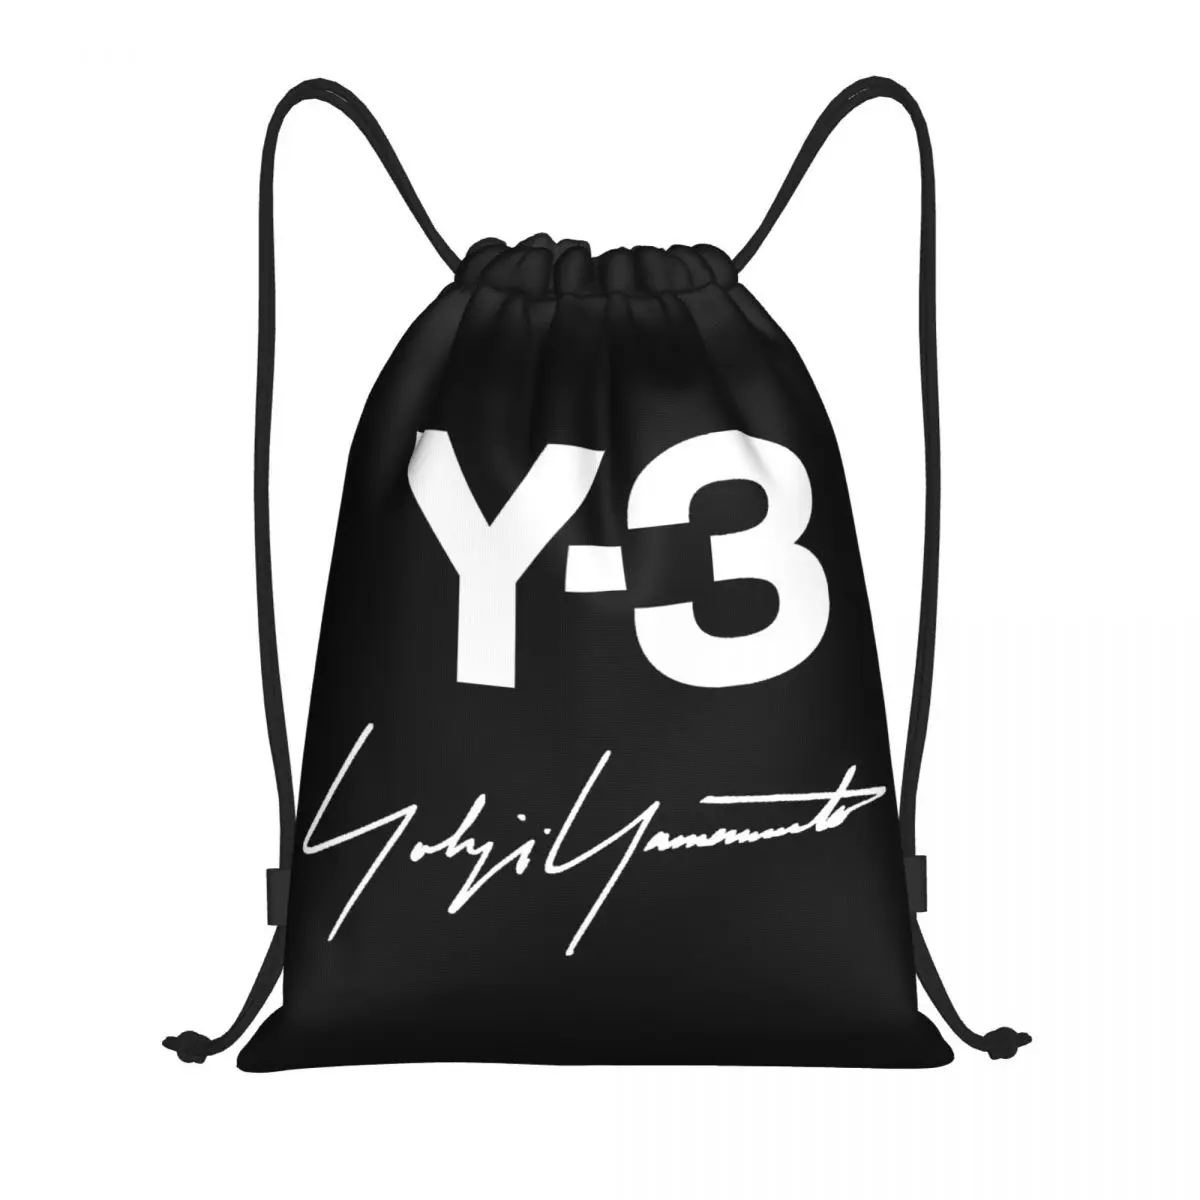 

Custom Yohji Yamamoto Of The Streets In Paris Drawstring Bag for Shopping Yoga Backpacks Men Women Sports Gym Sackpack